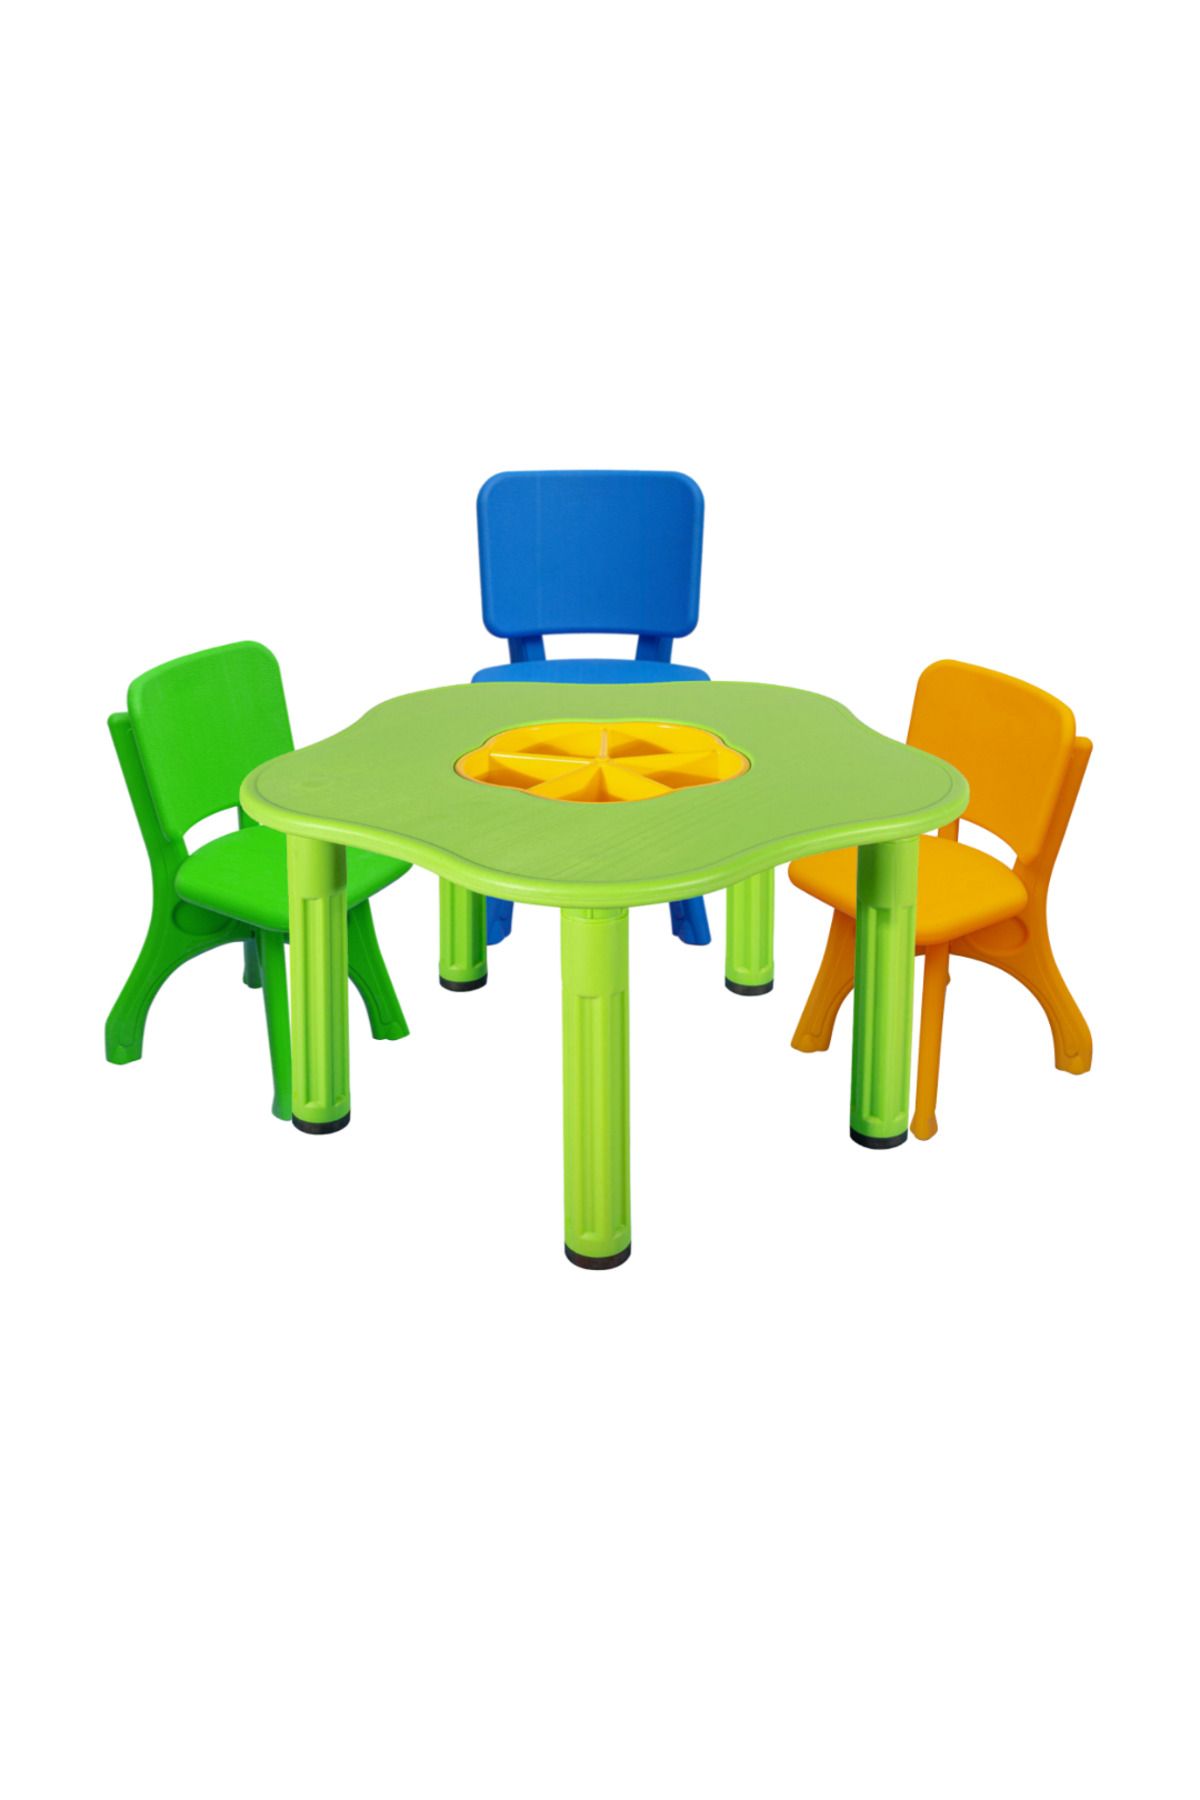 MUPARK Anaokulu - Kreş - Aktivite Masa Sandalye Set - 1 Masa 3 Sandalye Çocuk Sandalye Çocuk Masa - Hazneli